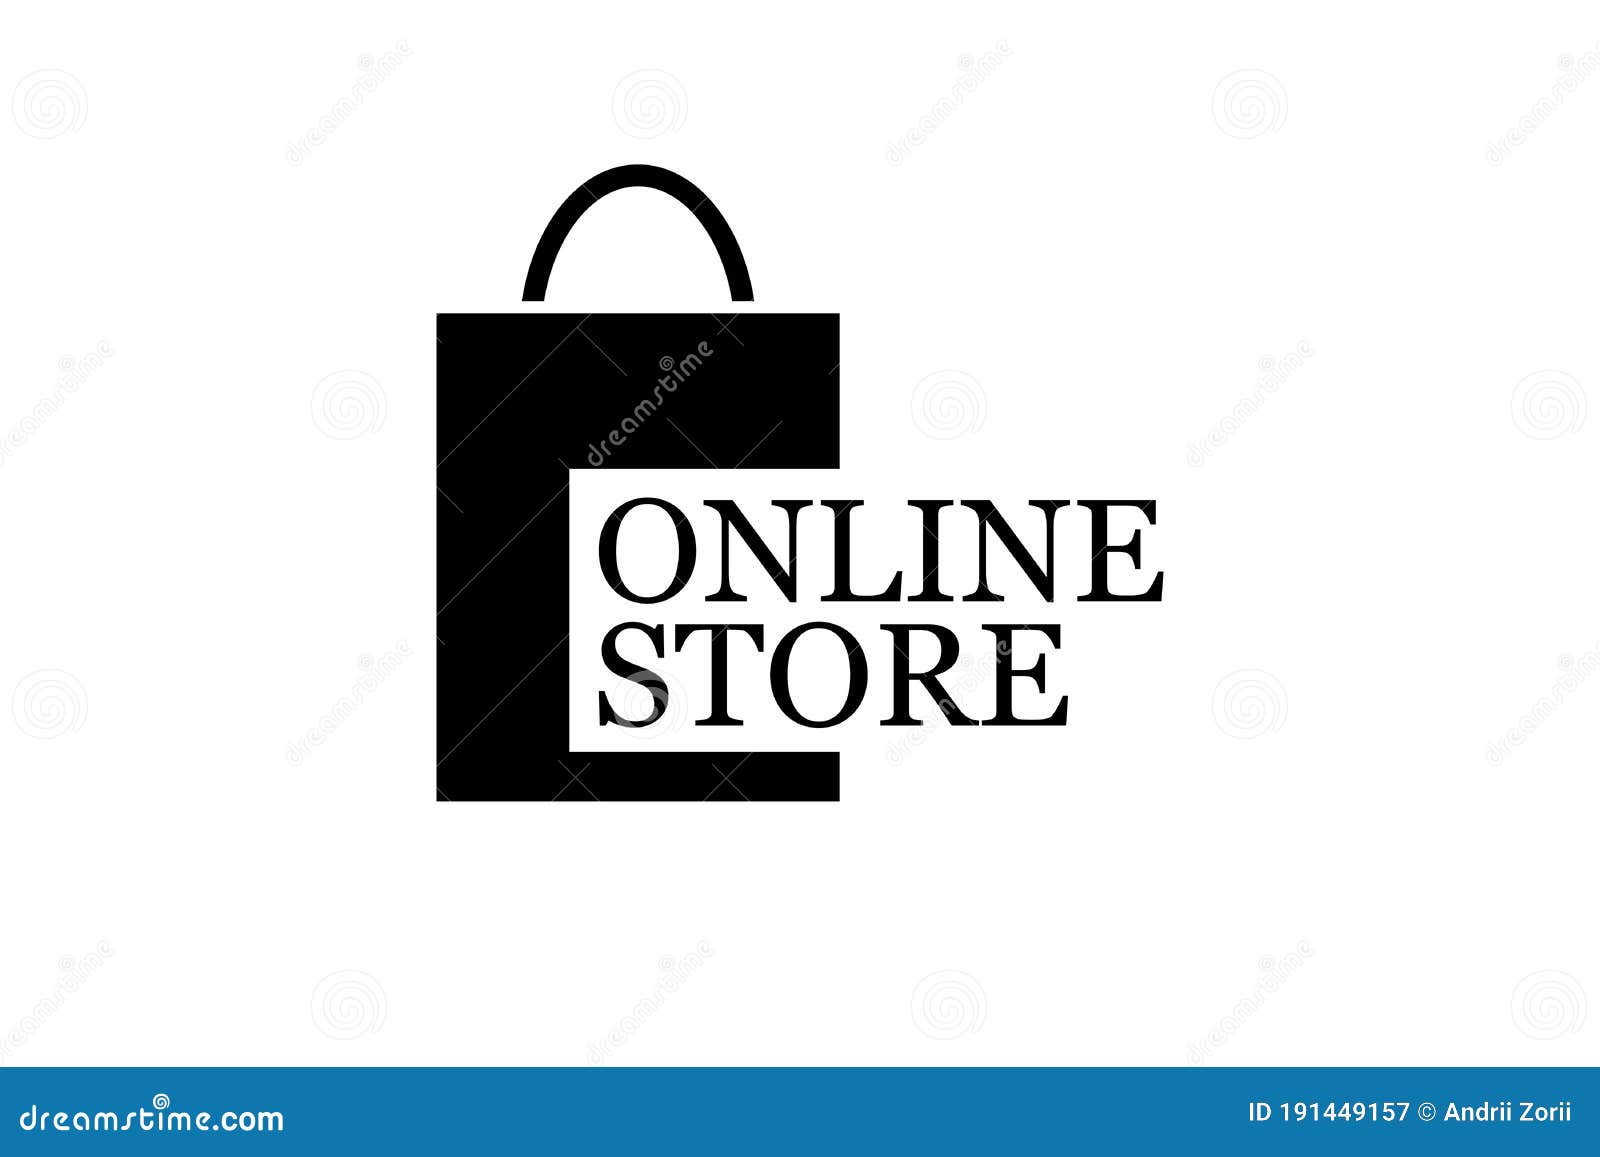 Misbruik Onderhoud Vijftig Online Shop, Online Store Logo. Shopping Logo. Logotype for Business Stock  Vector - Illustration of discount, creative: 191449157